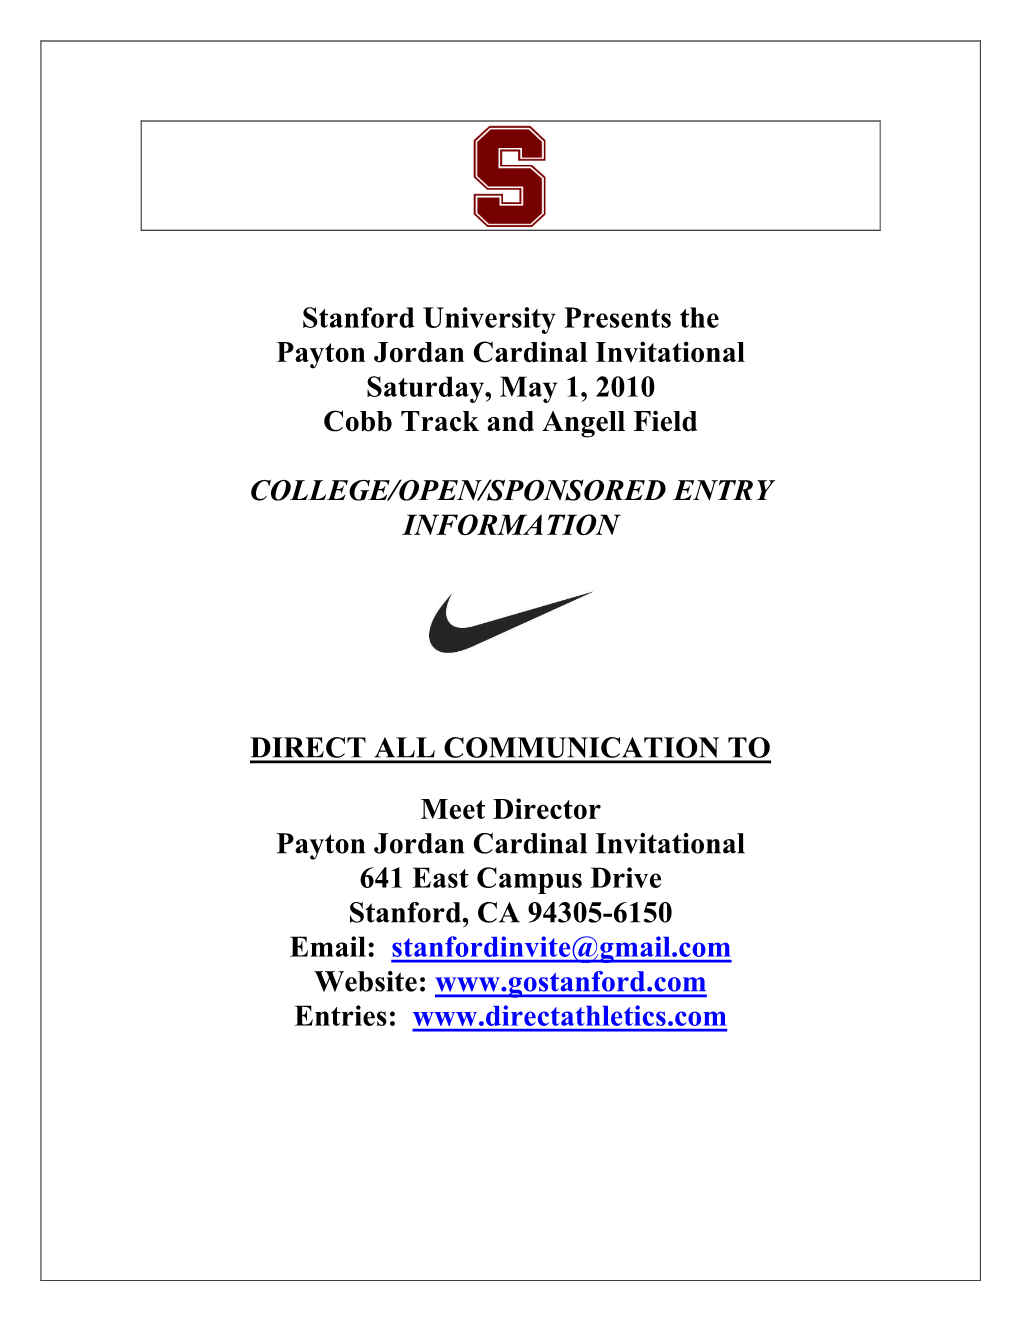 Stanford University Presents the Payton Jordan Cardinal Invitational Saturday, May 1, 2010 Cobb Track and Angell Field